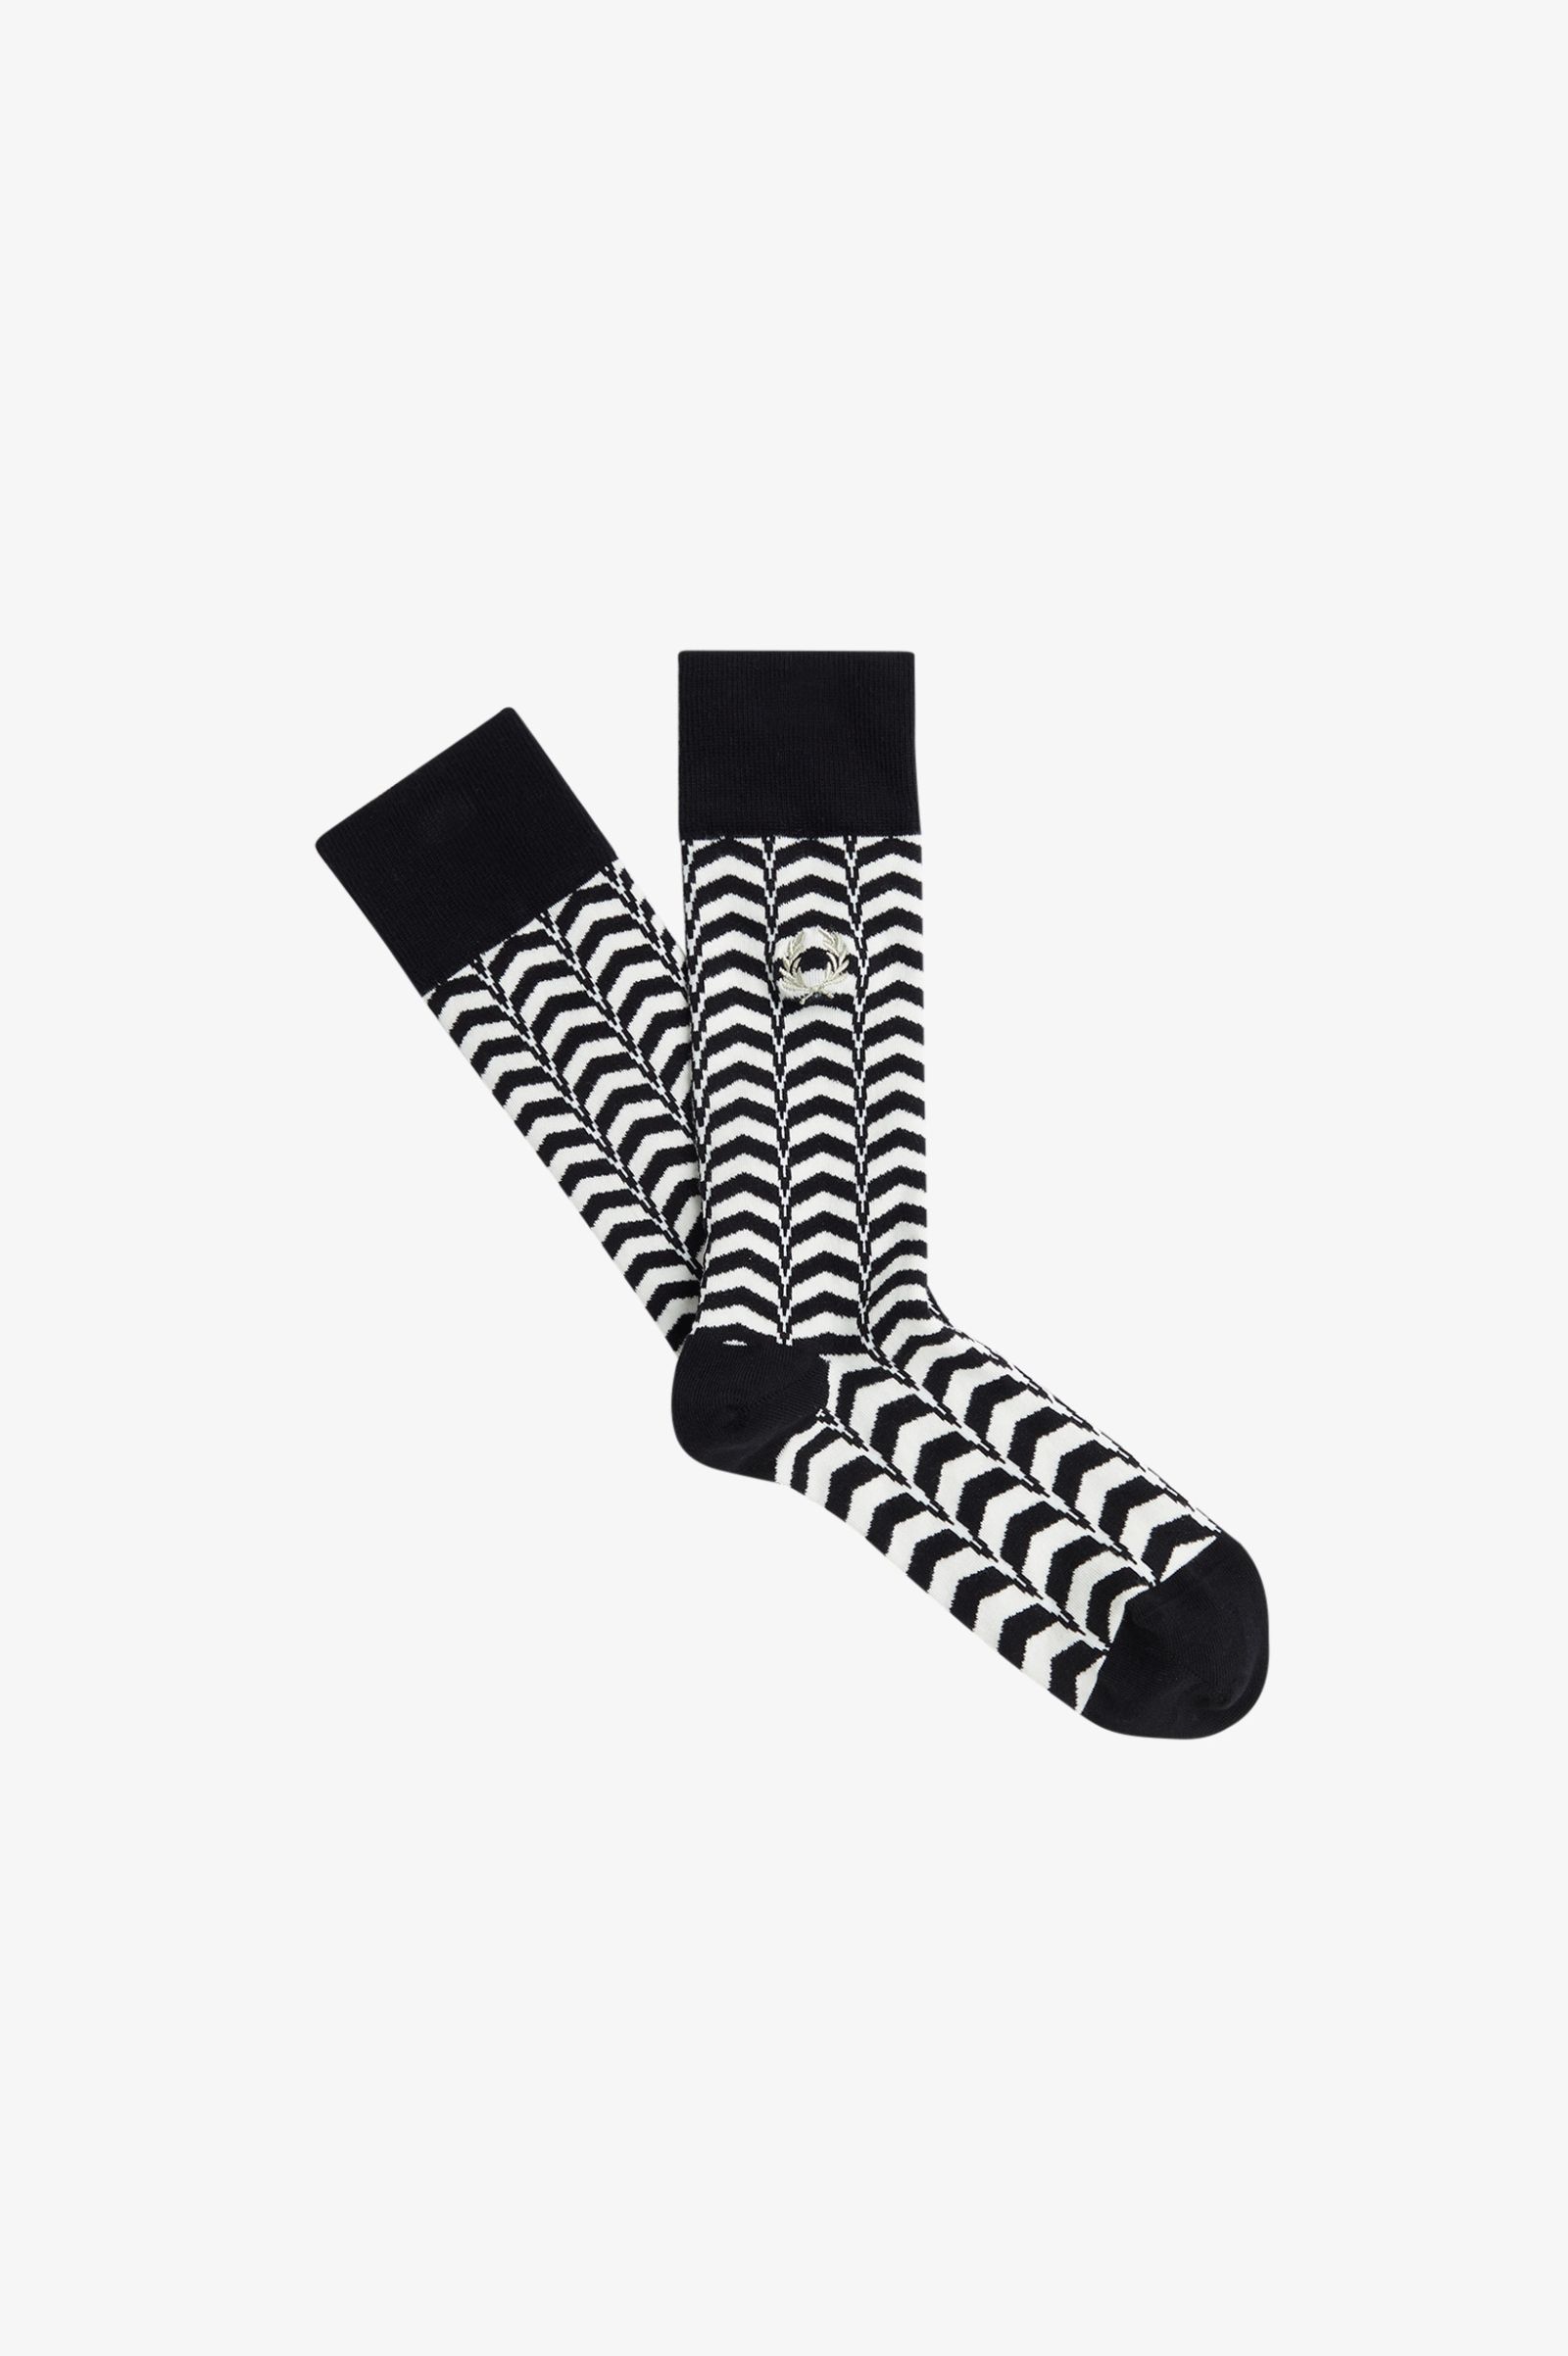 Abstract Print Sock - Black / Warm Grey | Accessories | Hats, Wallets ...